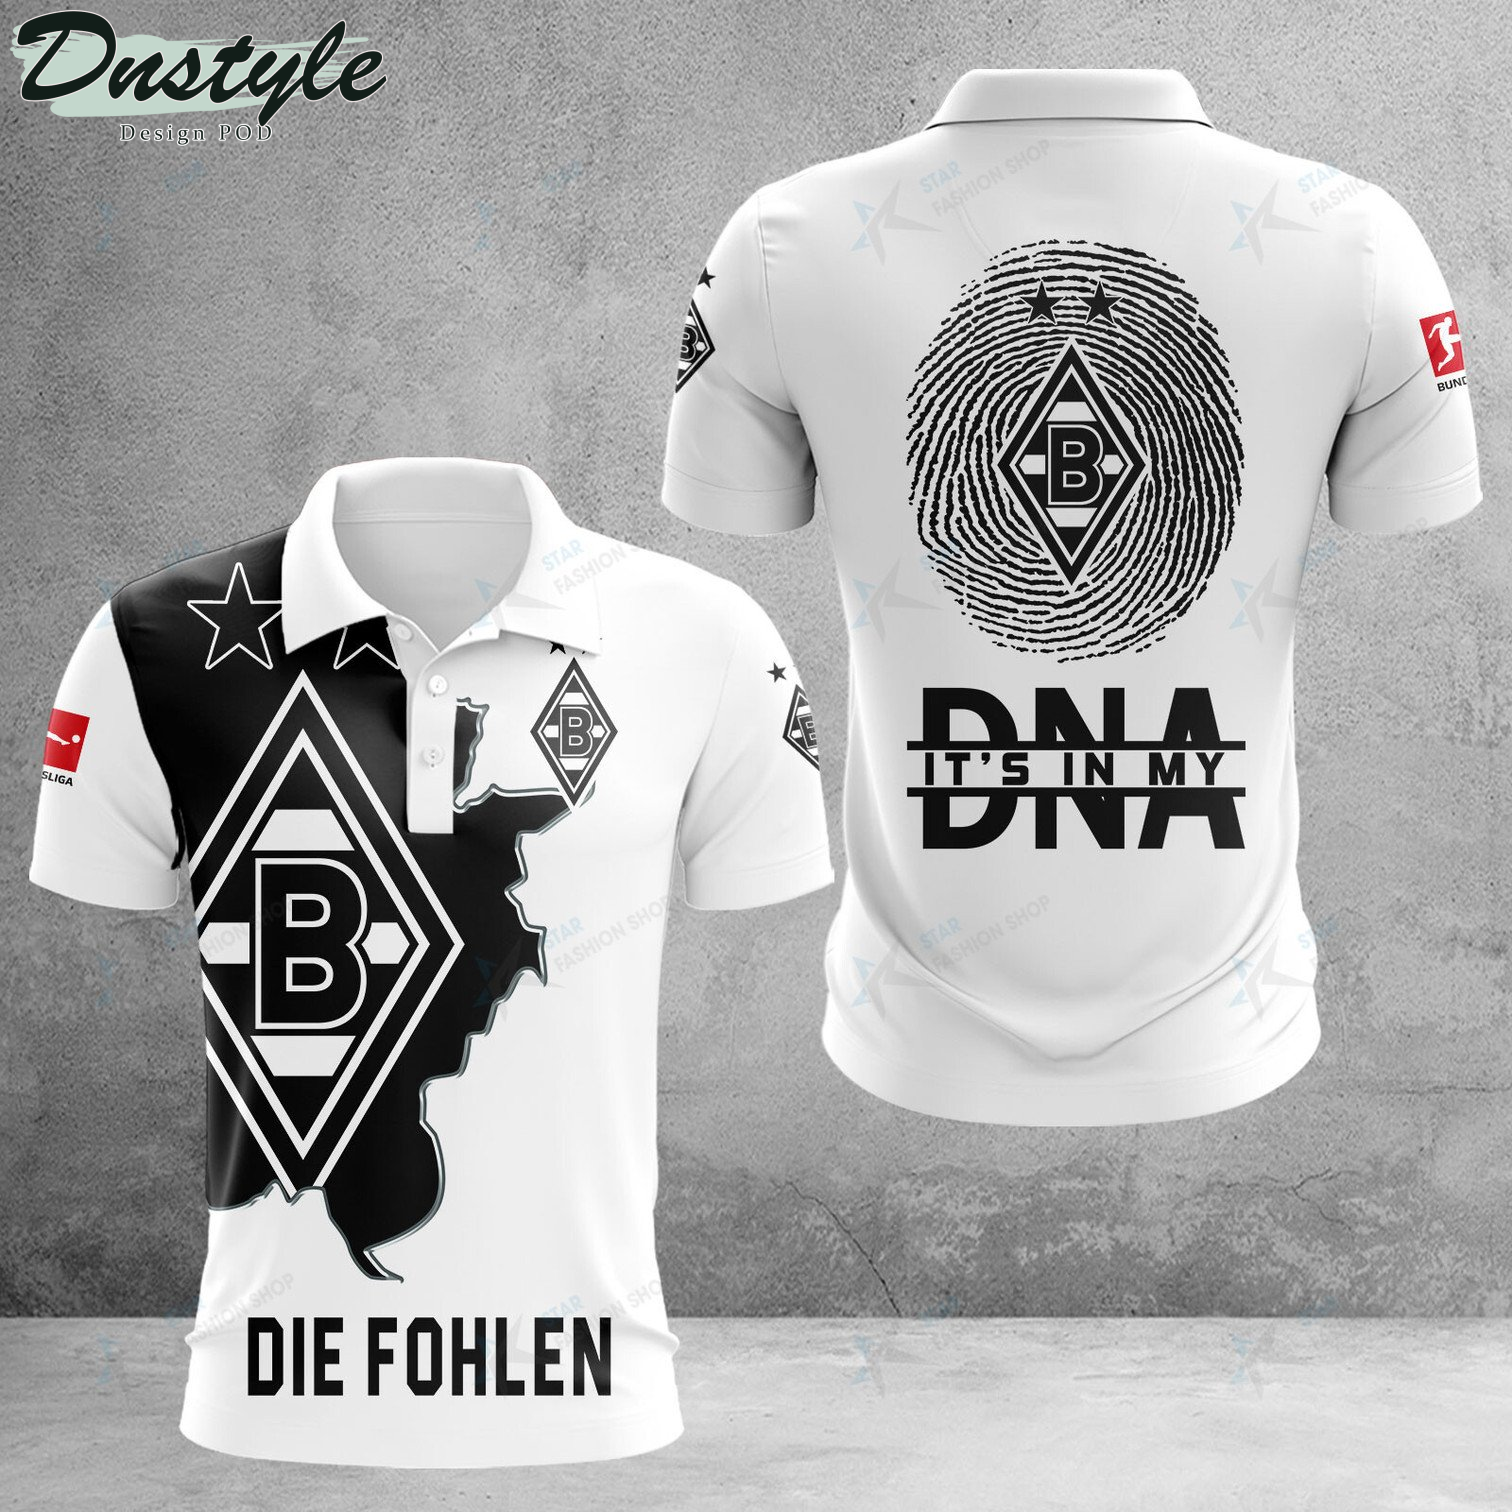 Borussia Monchengladbach it's in my DNA polo shirt